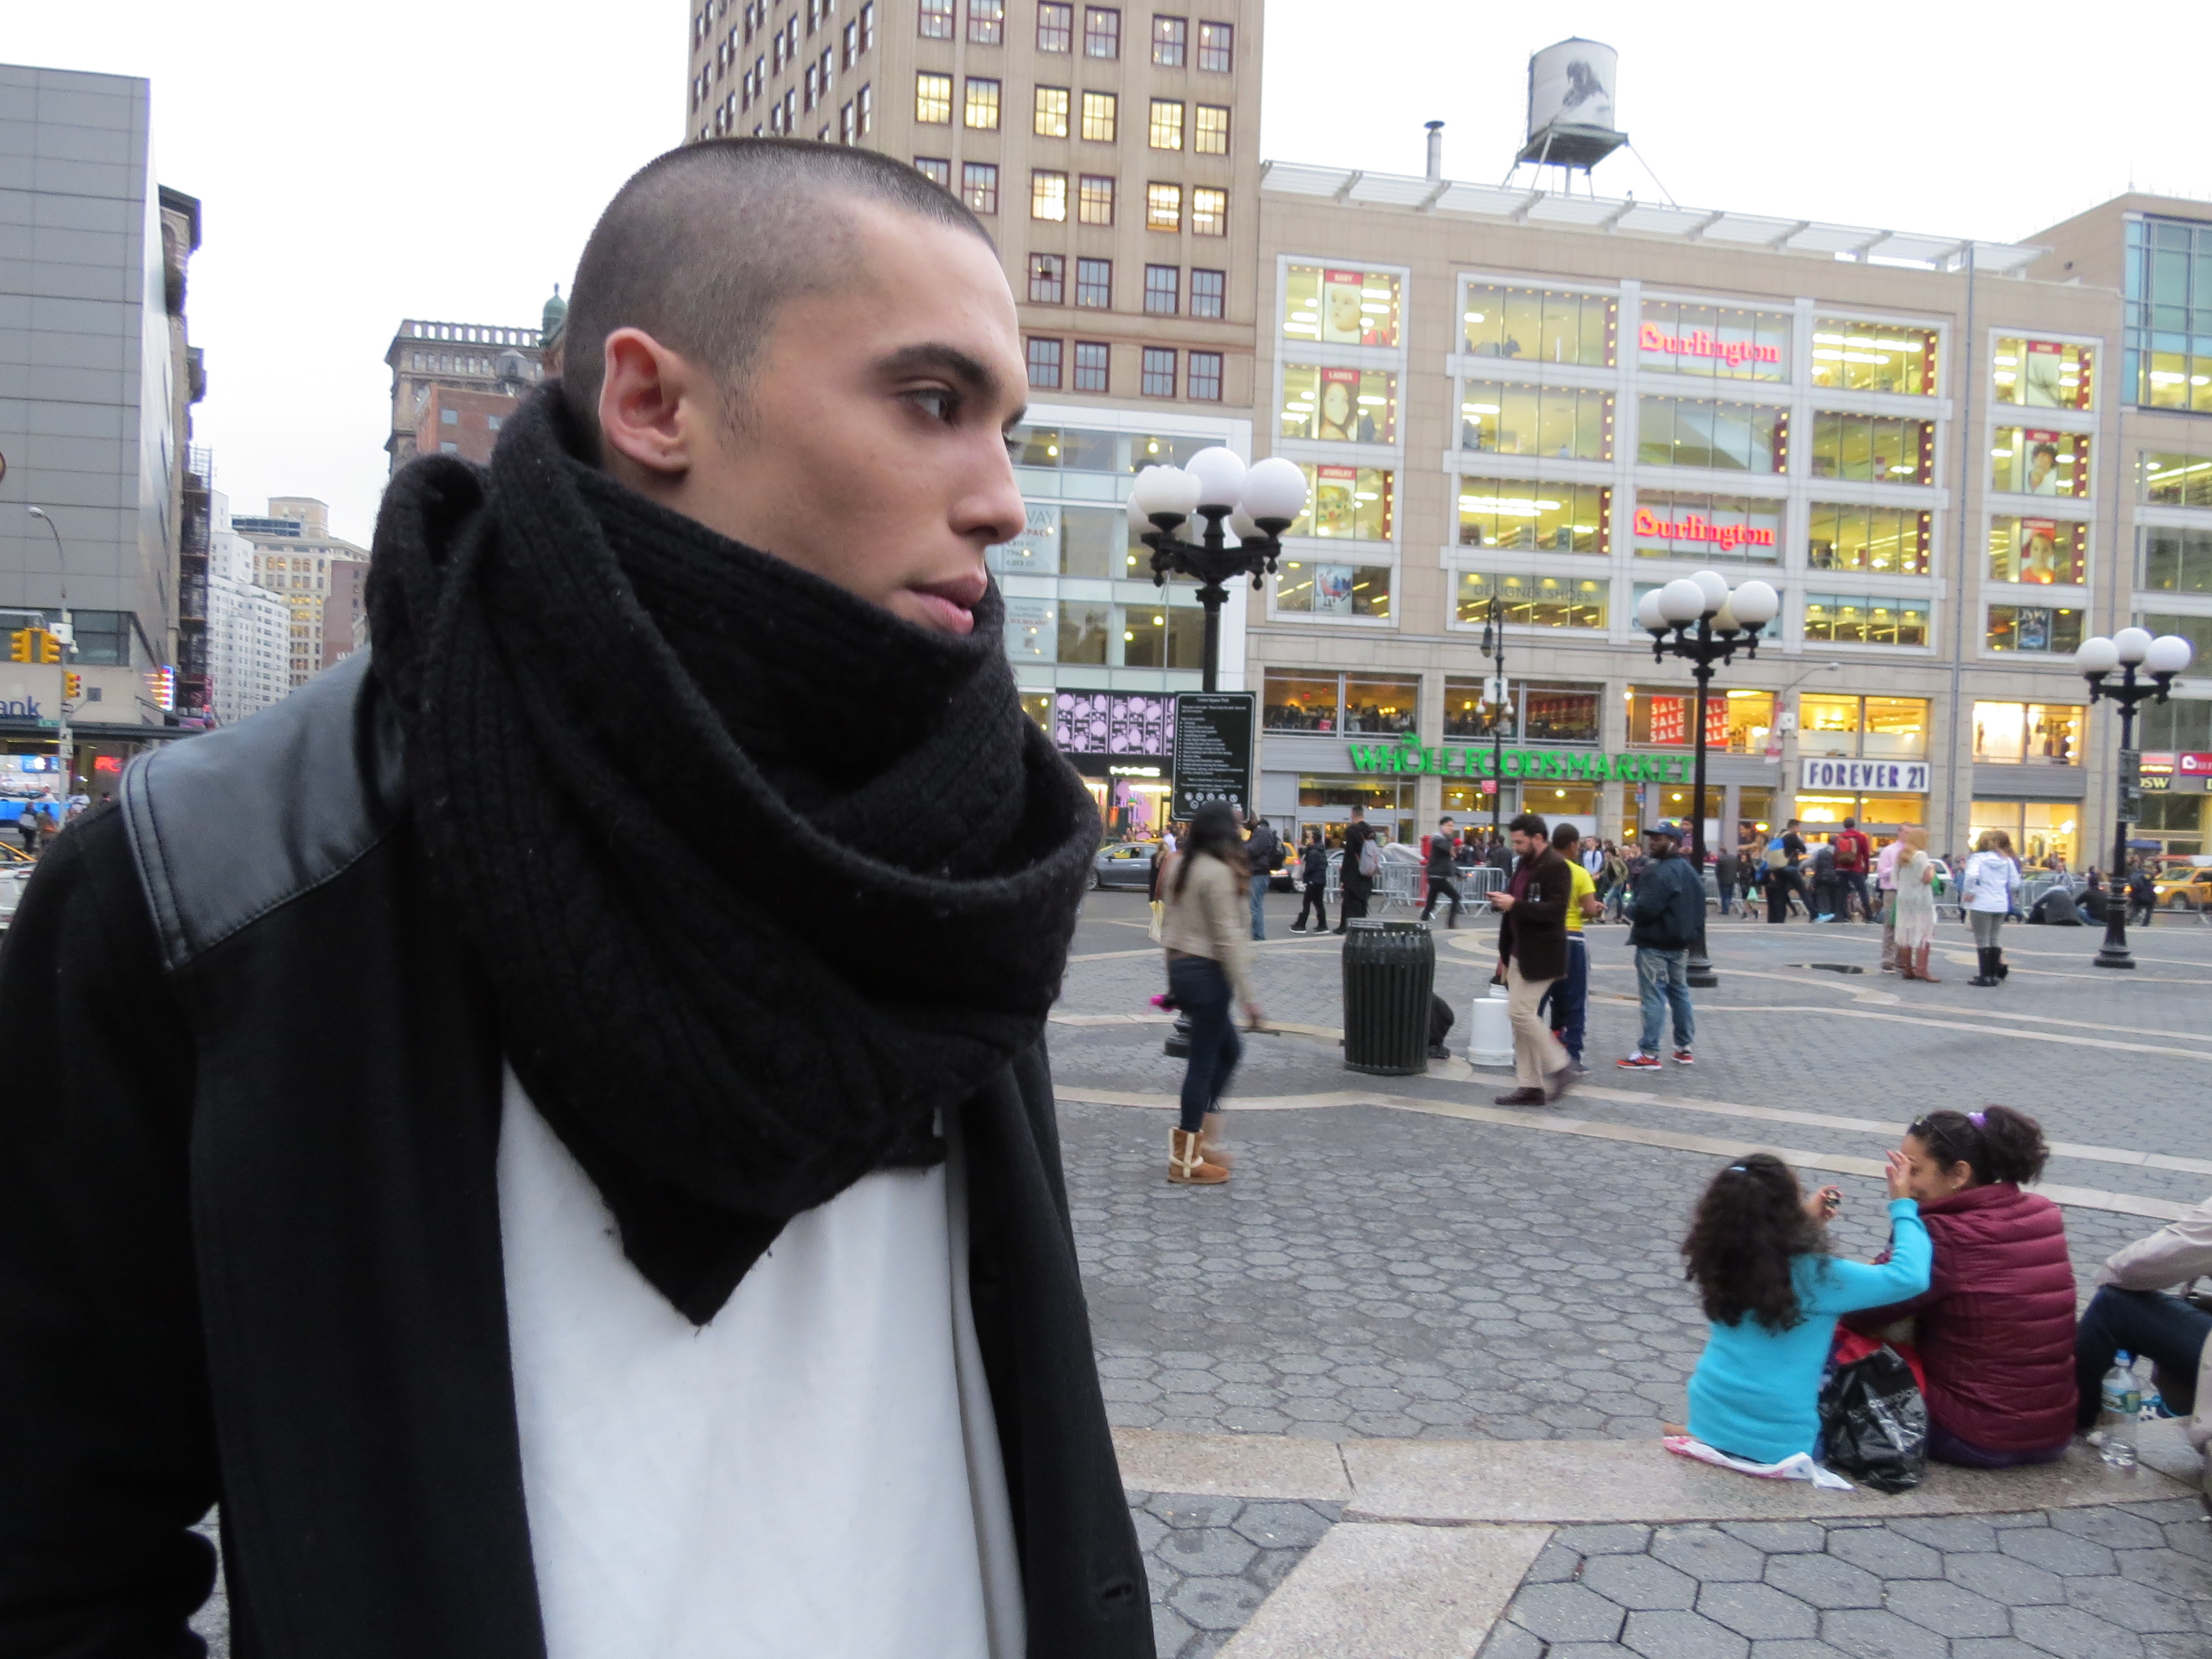 pretty bald boy profile with scarf